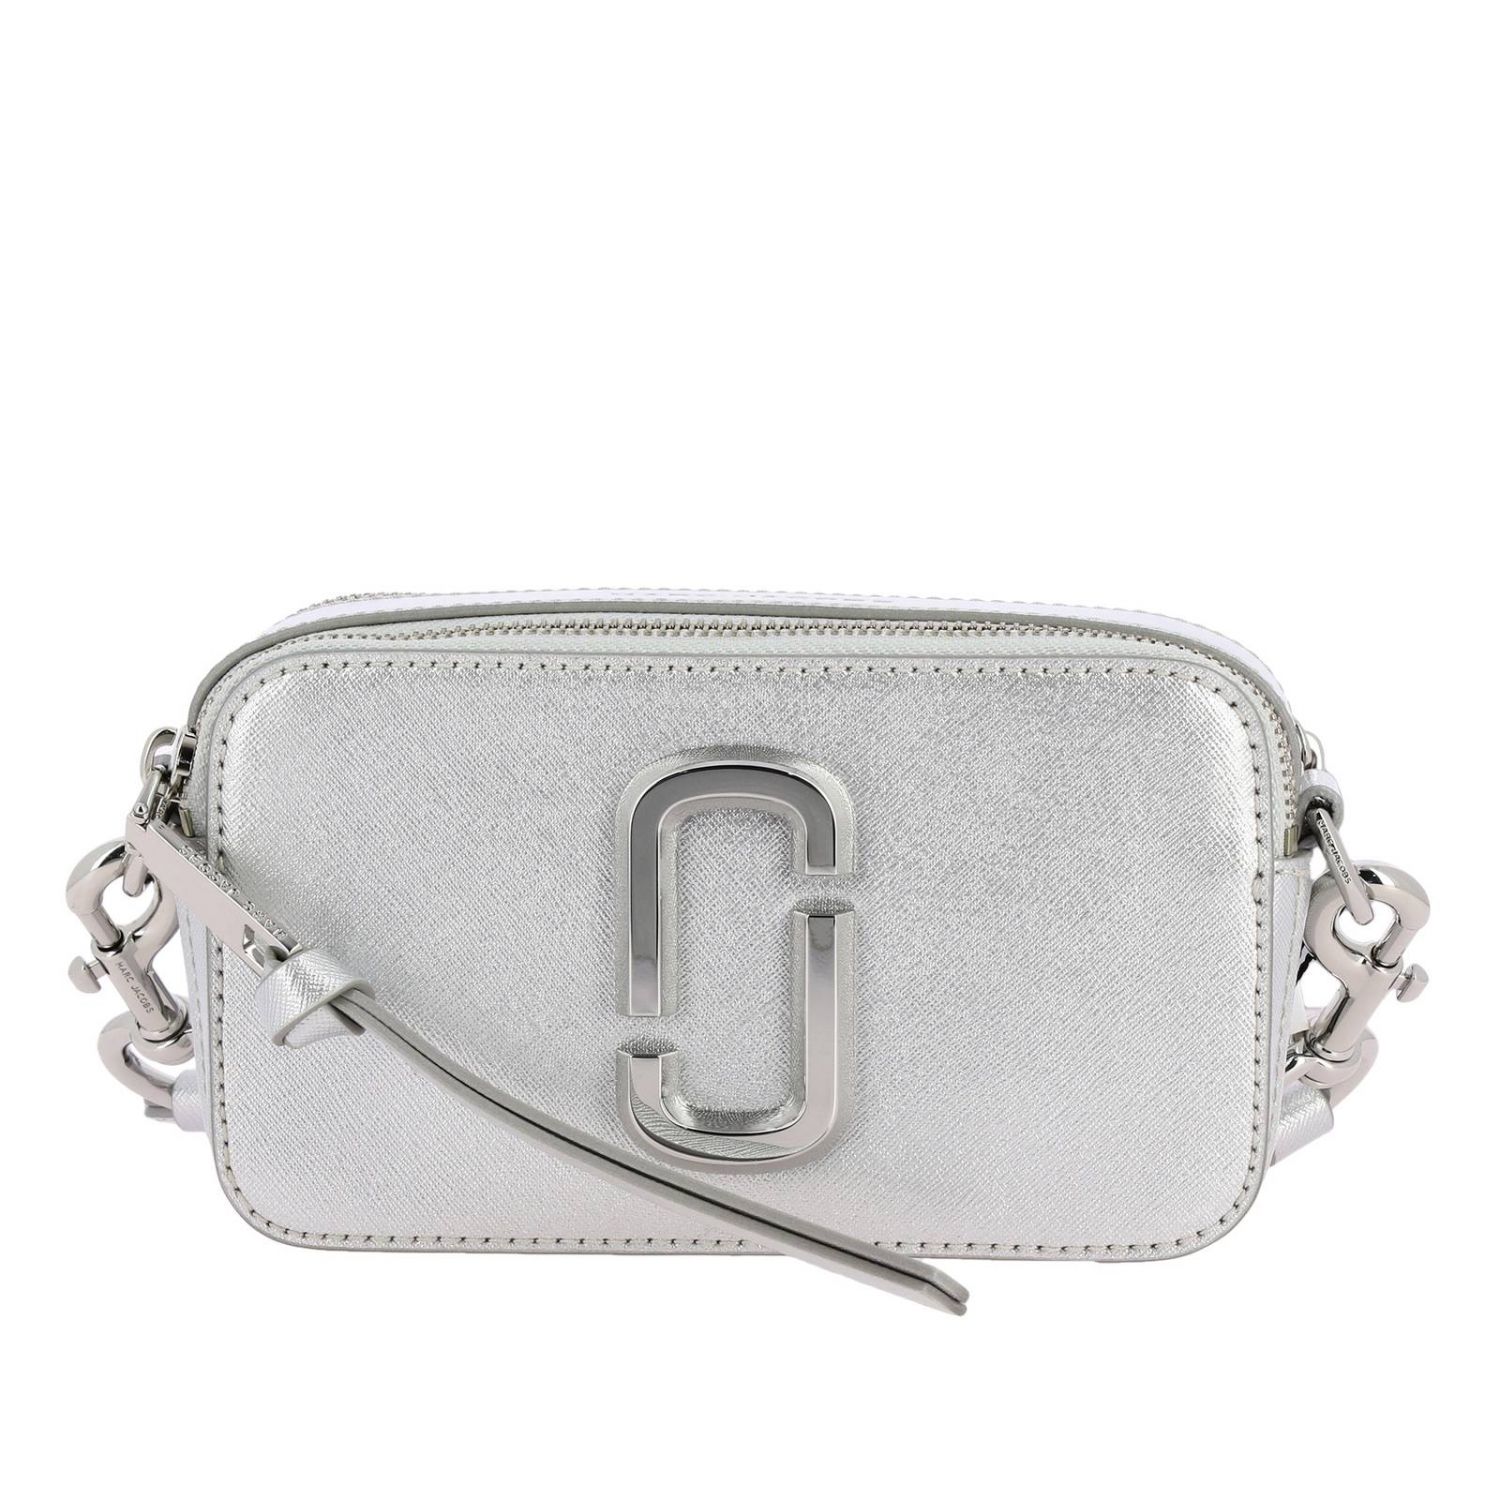 MARC JACOBS: mini bag for women - Silver | Marc Jacobs mini bag ...